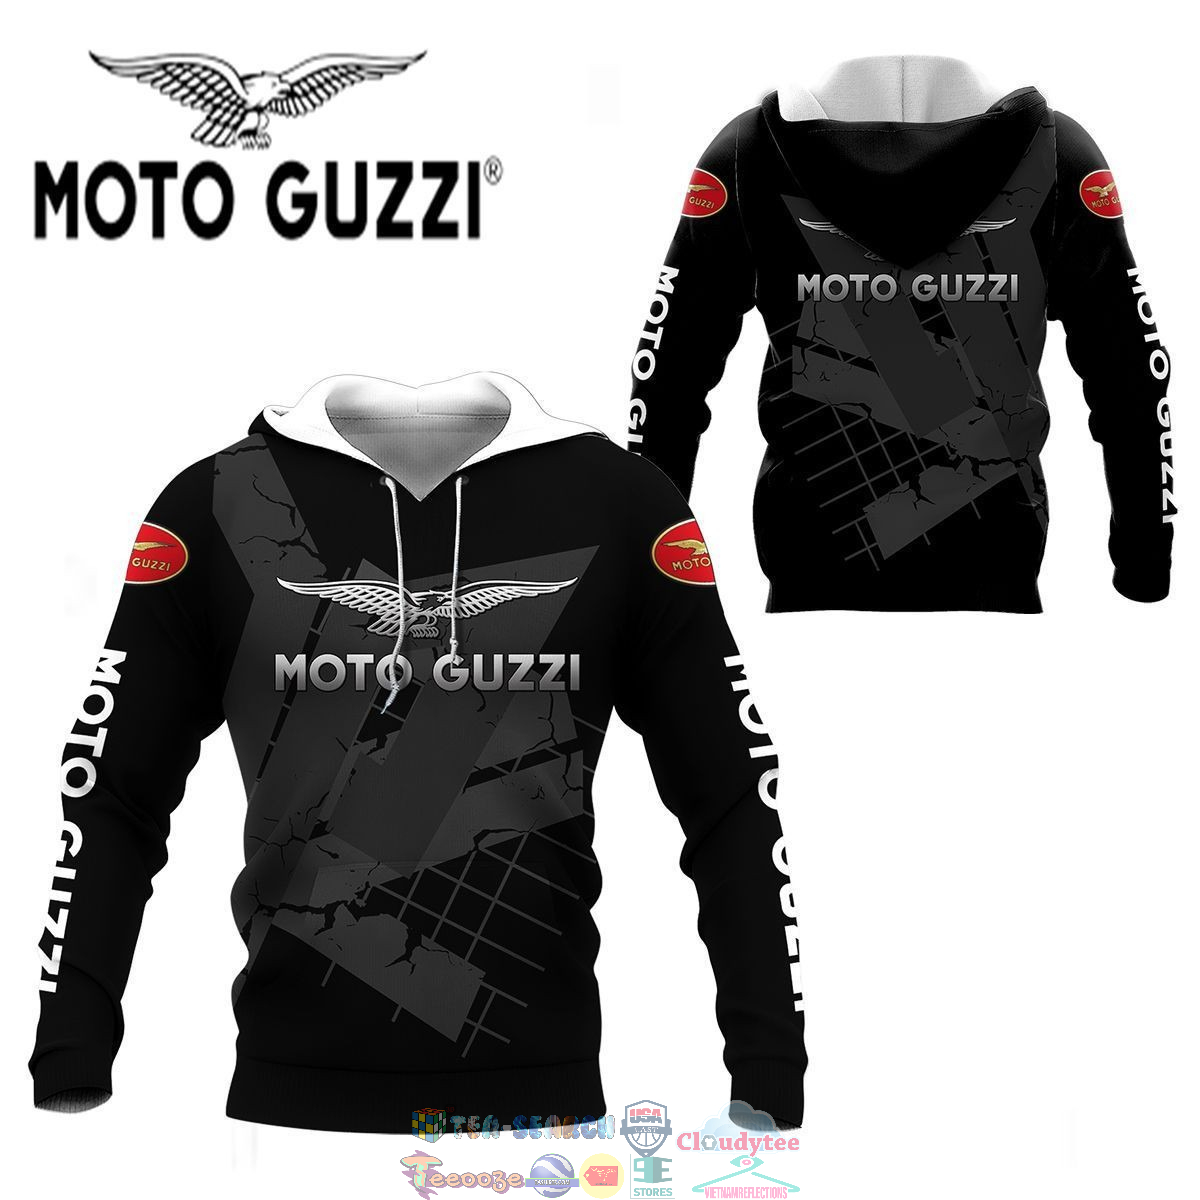 AjwWGvR0-TH060822-51xxxMoto-Guzzi-ver-8-3D-hoodie-and-t-shirt3.jpg